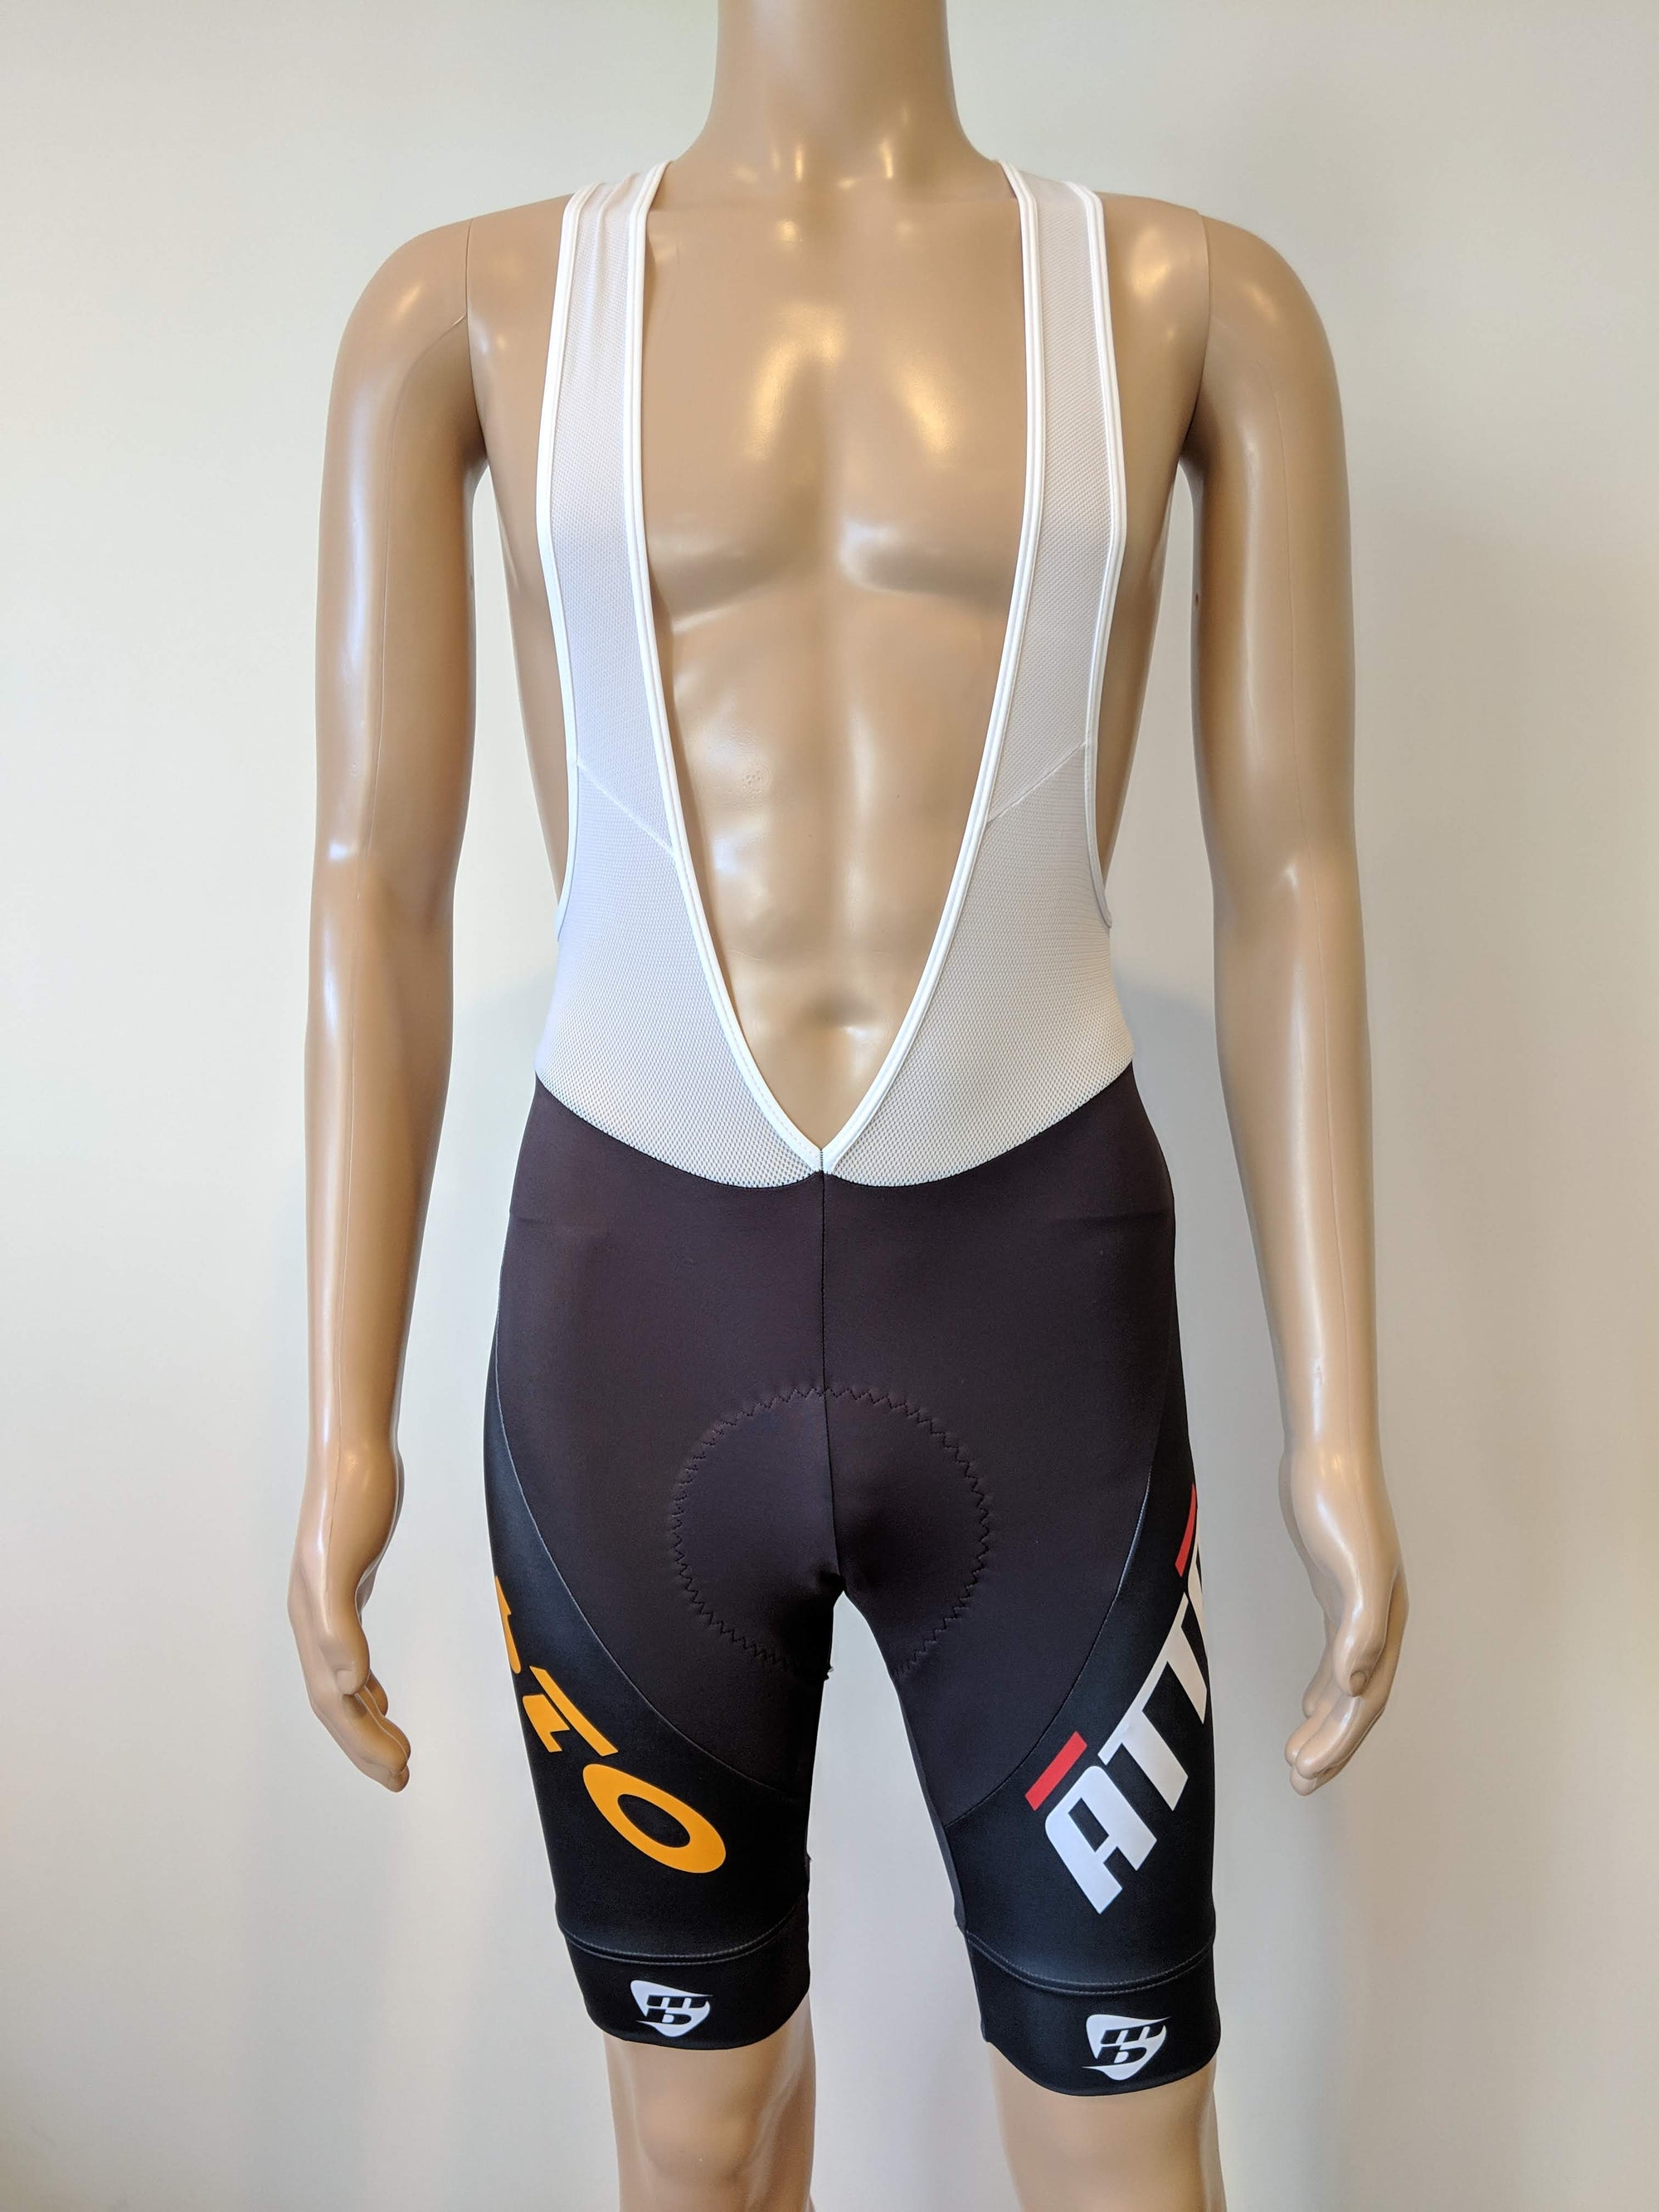 Ultrasport Bib shorts - ATG17 (Size M only available)